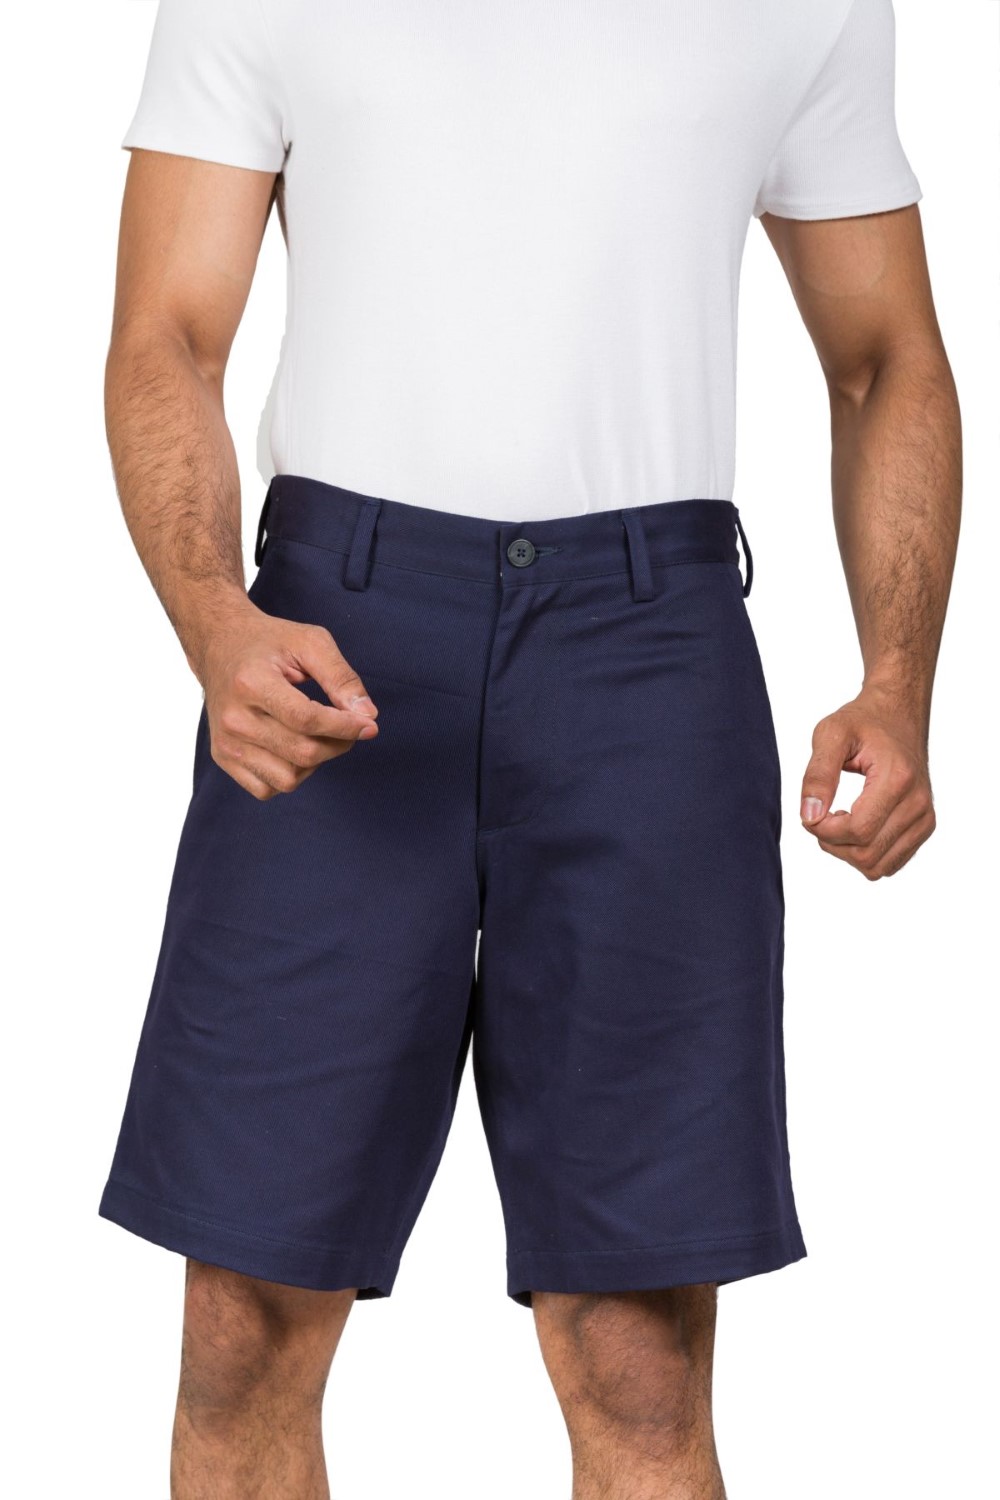 Comfort Fit Cotton Blend Navy Shorts